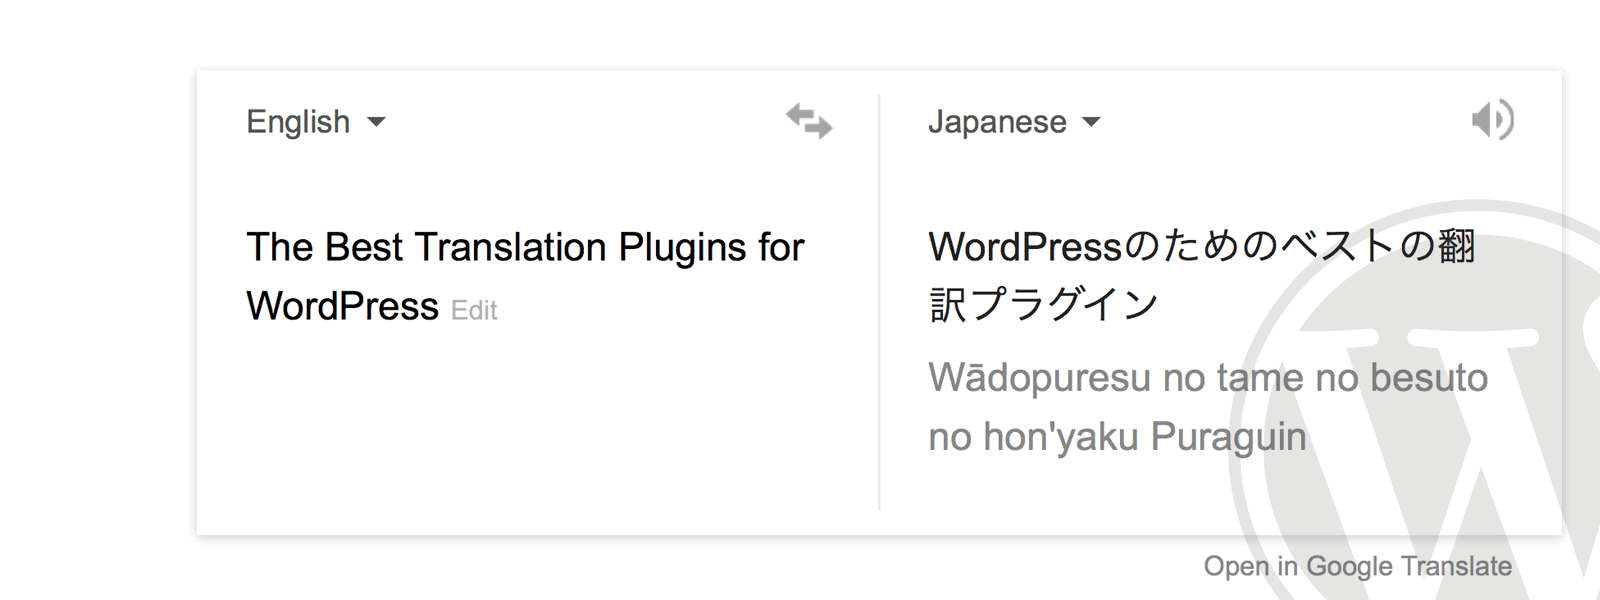 Best Multilingual and Translation Plugins for WordPress